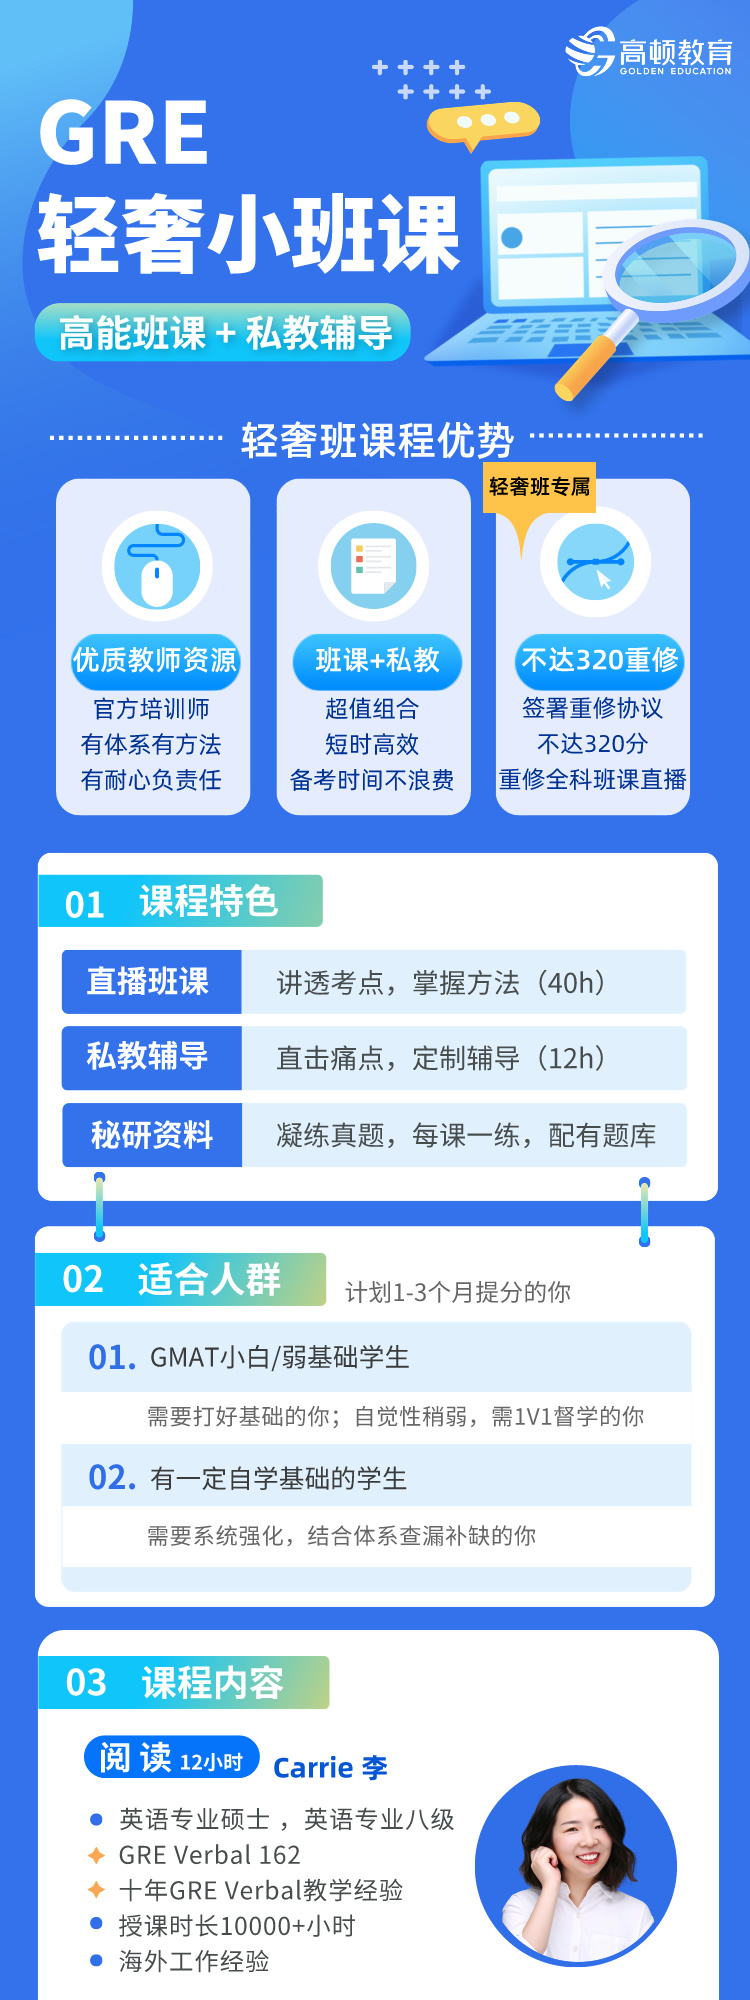 https://simg01.gaodunwangxiao.com/uploadfiles/product-center/202403/29/7af16_20240329160148.jpg